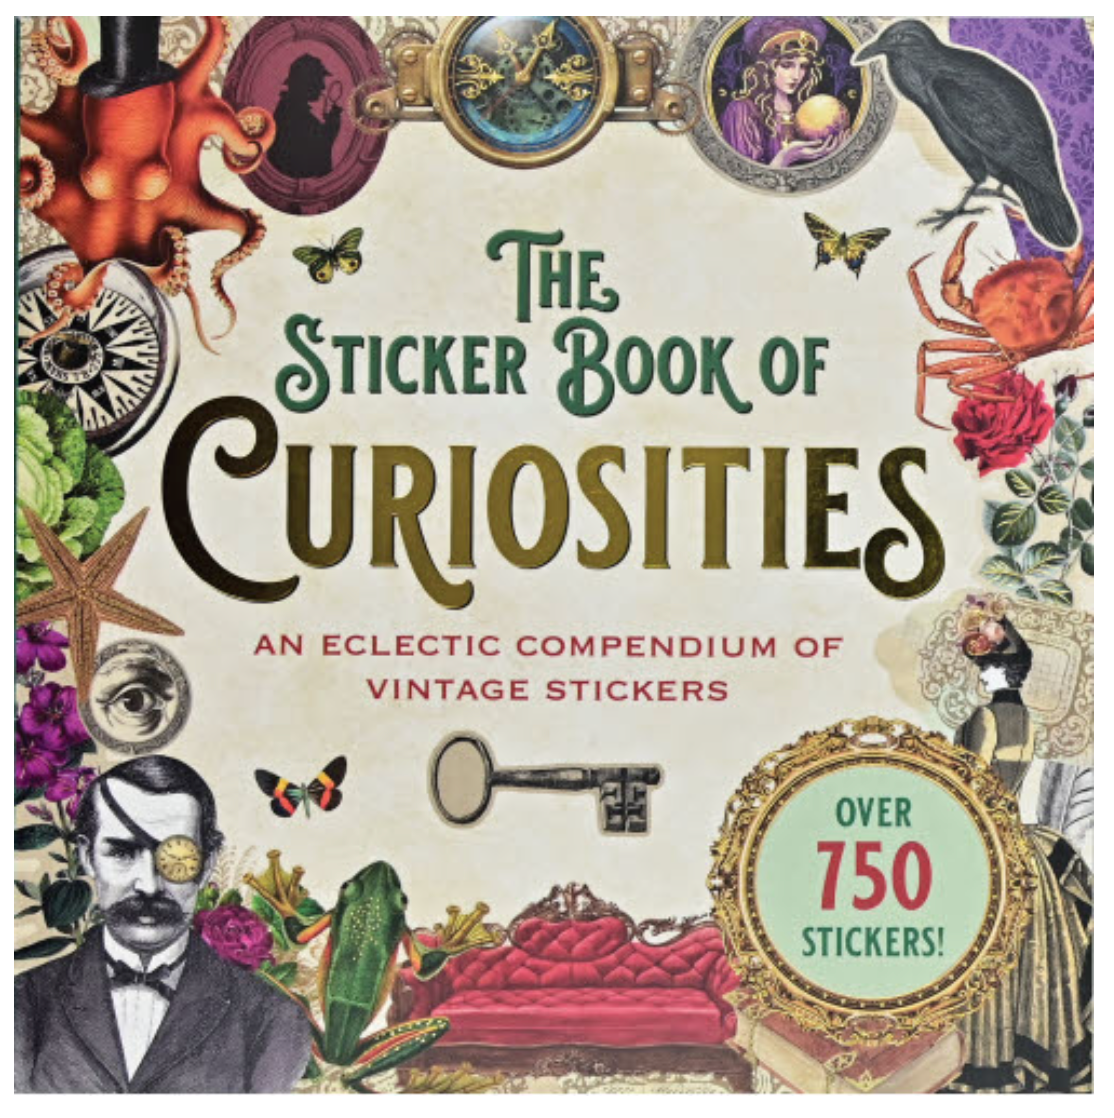 The Sticker Book of Curiosities